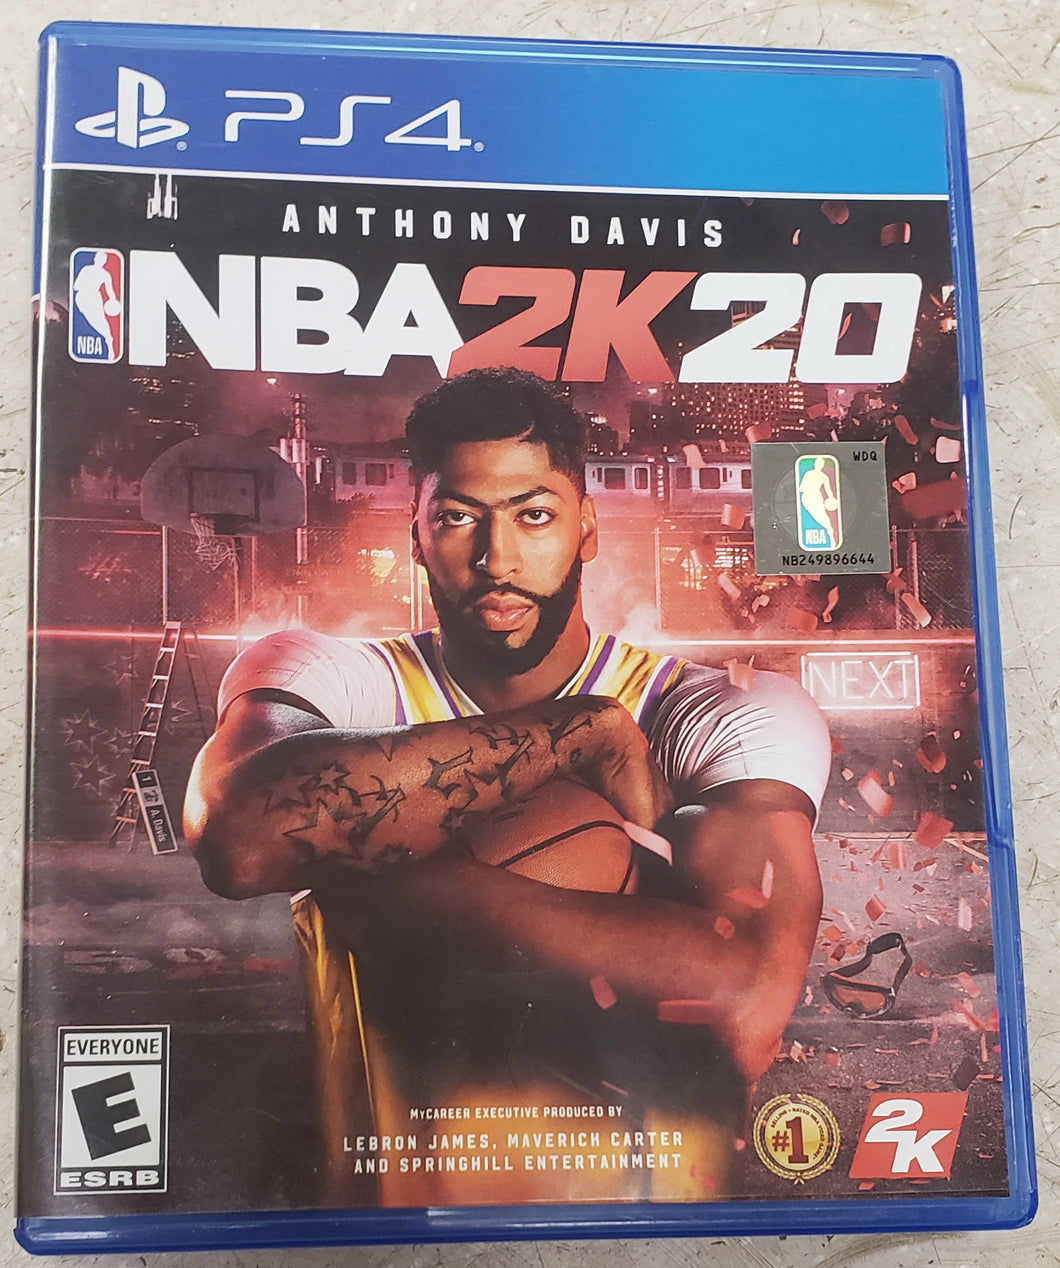 NBA 2K20 PS4 Game